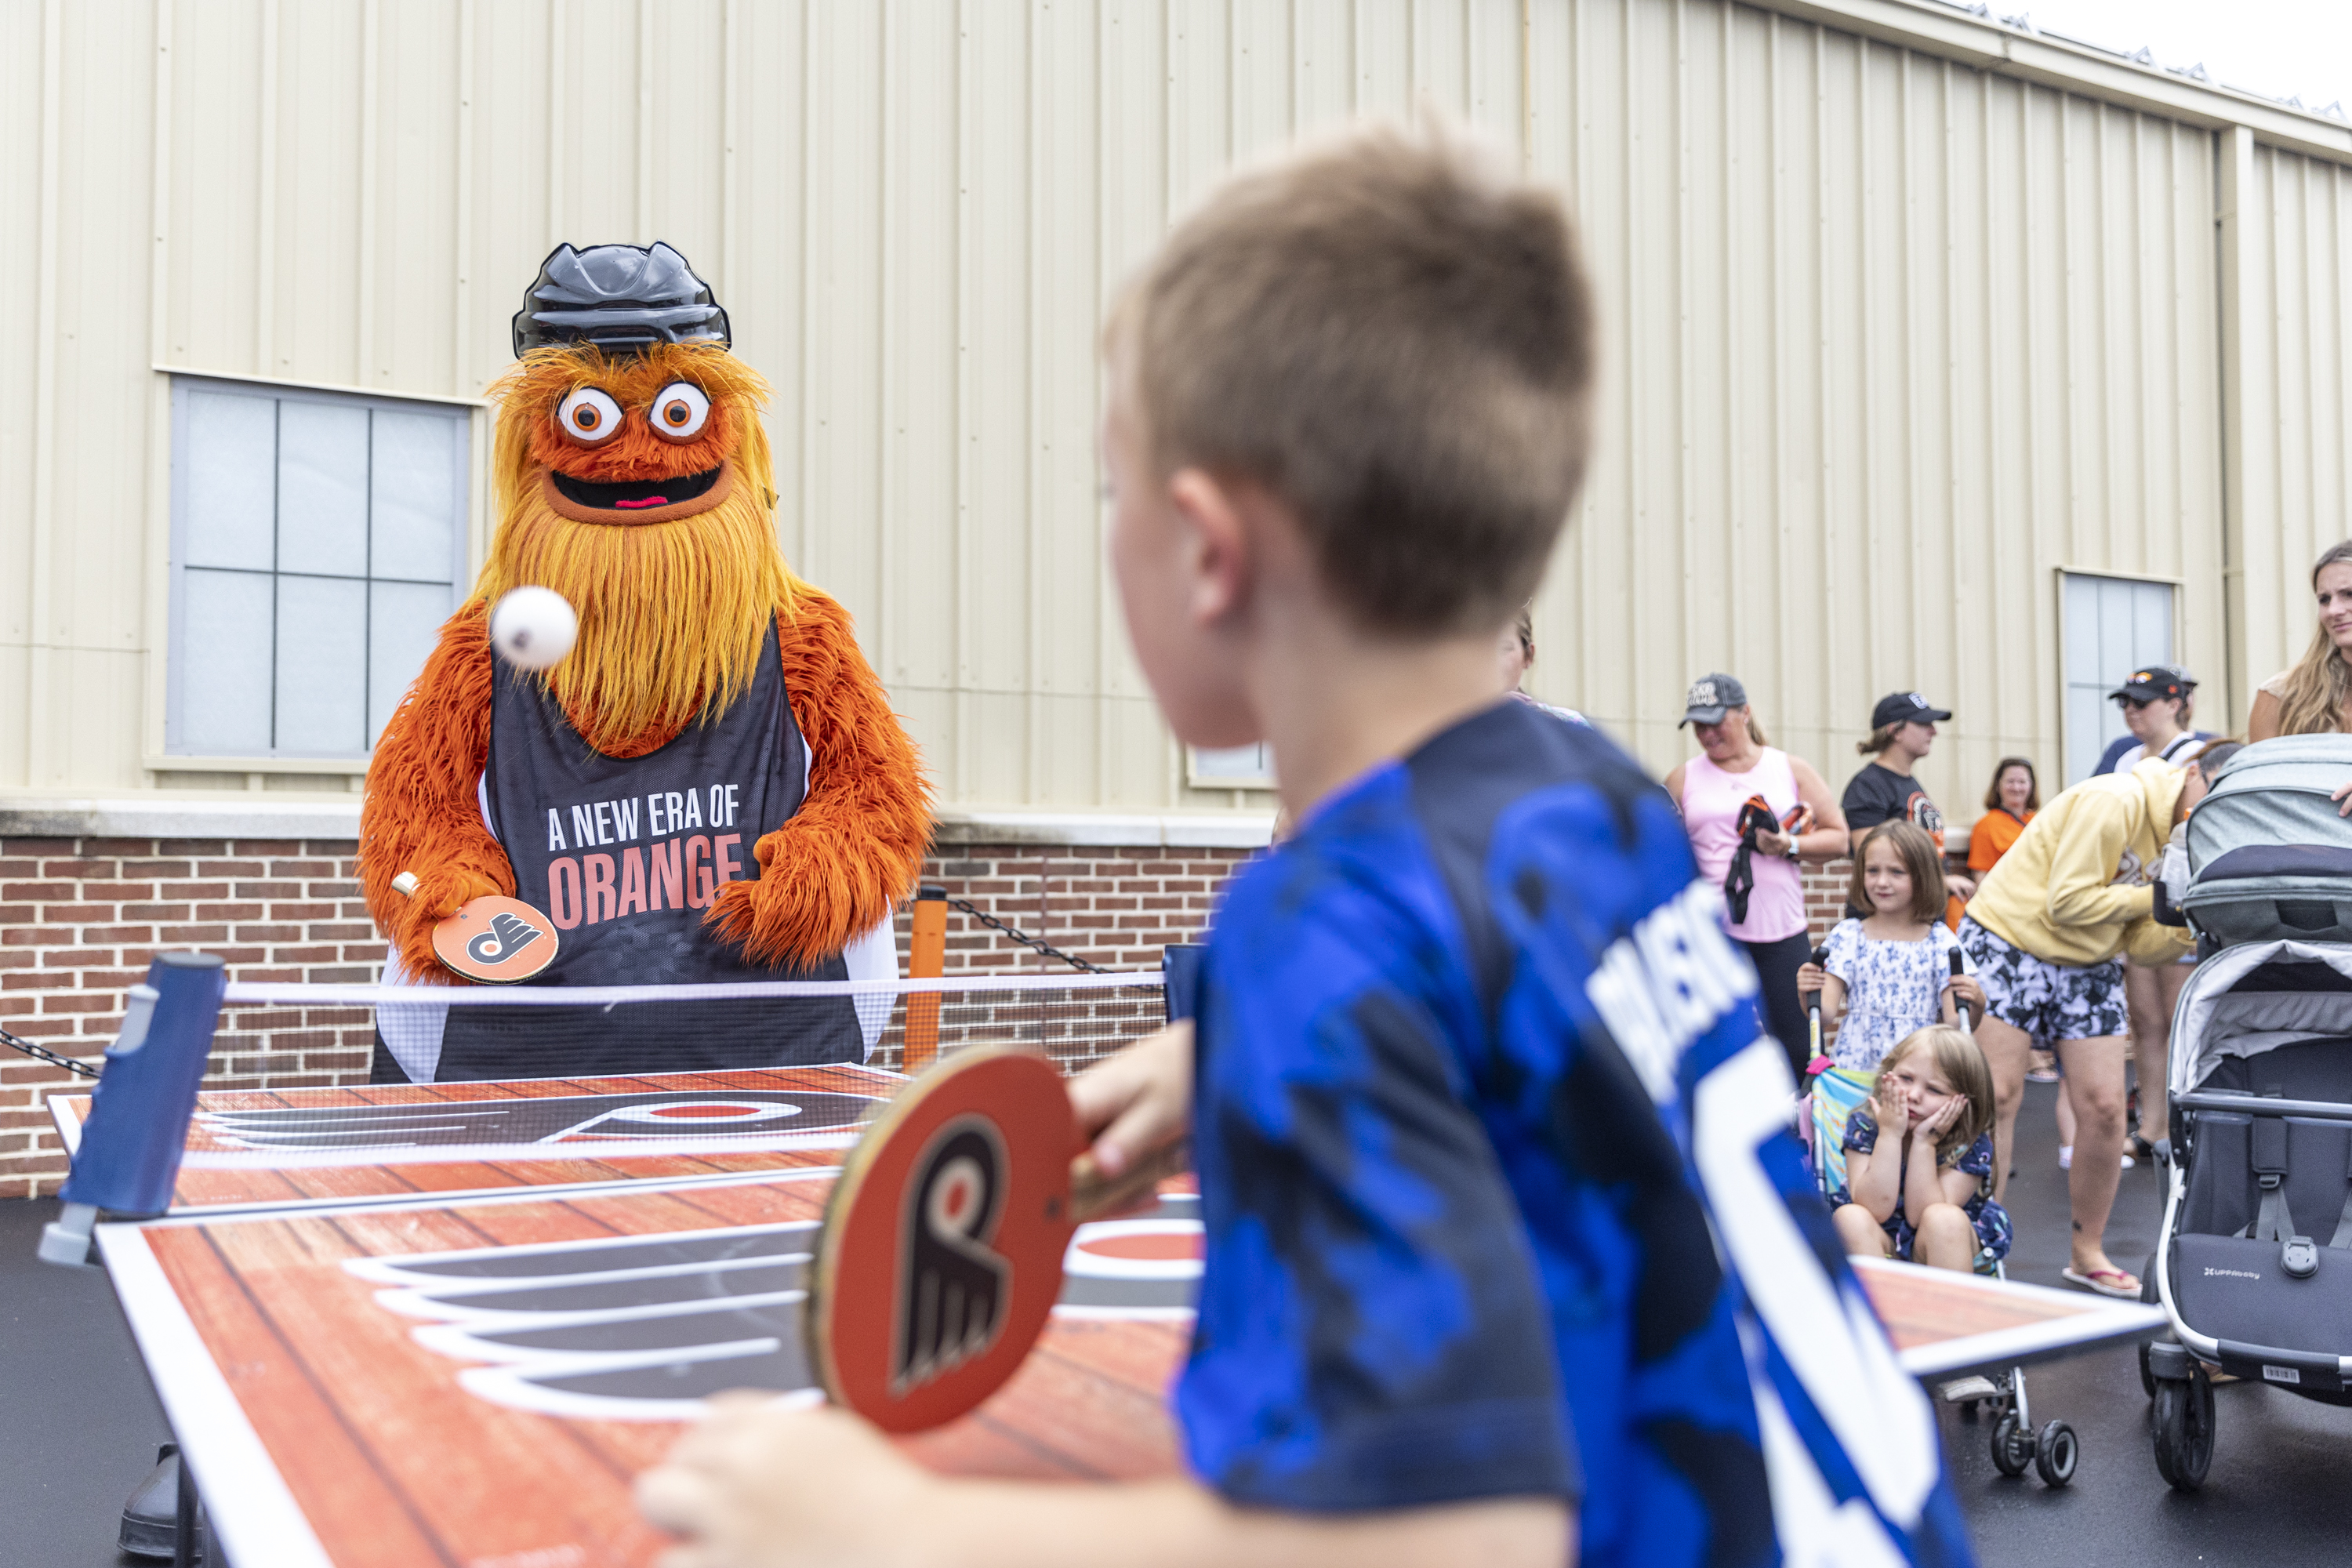 Gritty Love: Philadelphia Flyers mascot is a big hit